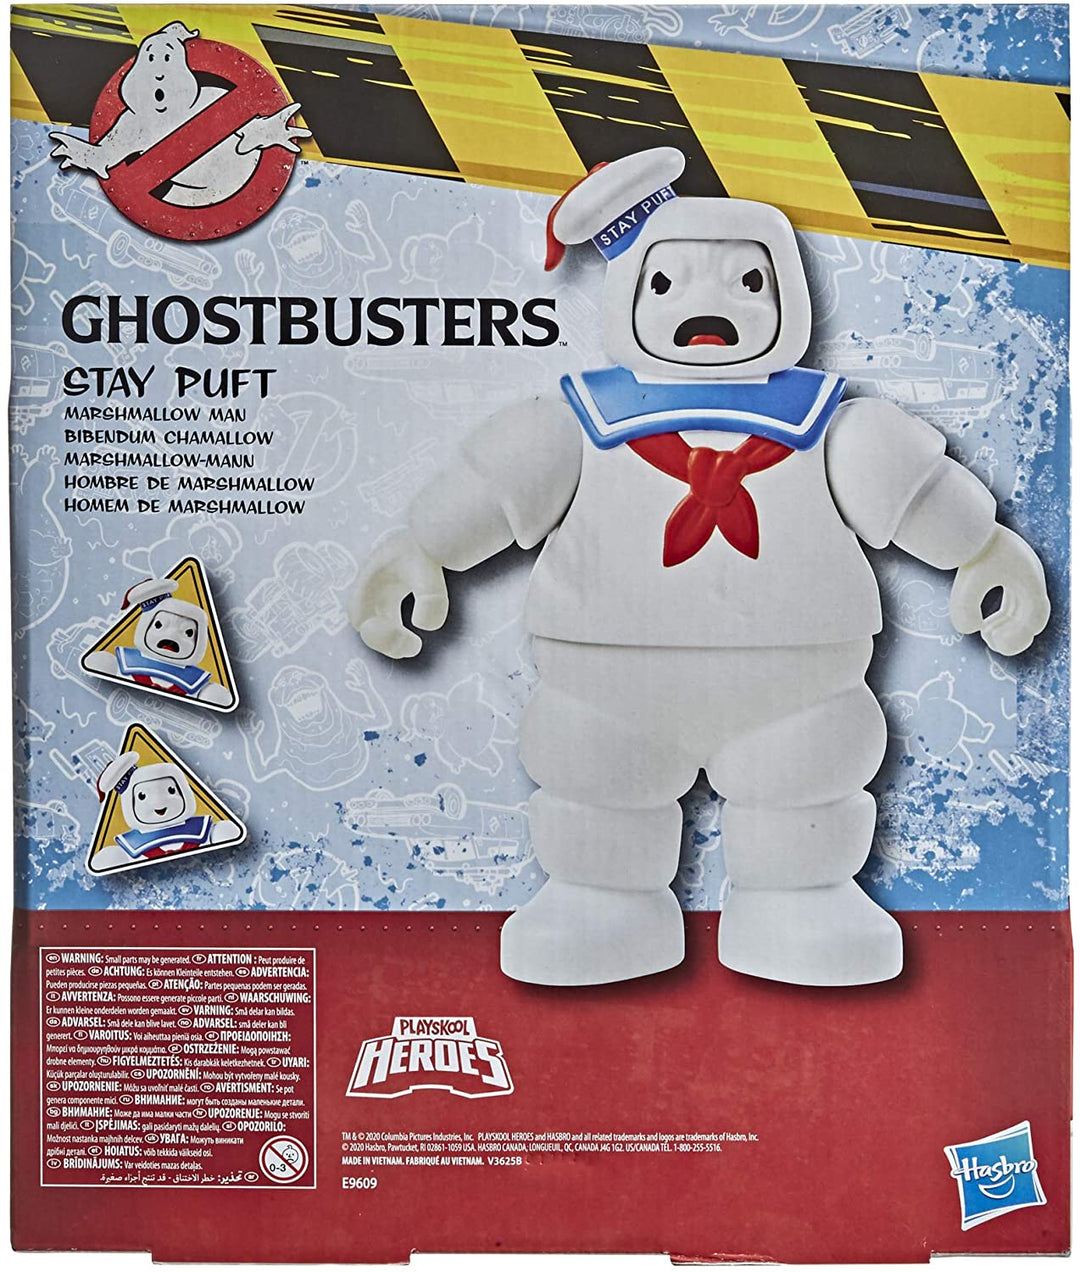 Ghostbusters Ghb Psa Mega Mighties Staypuft